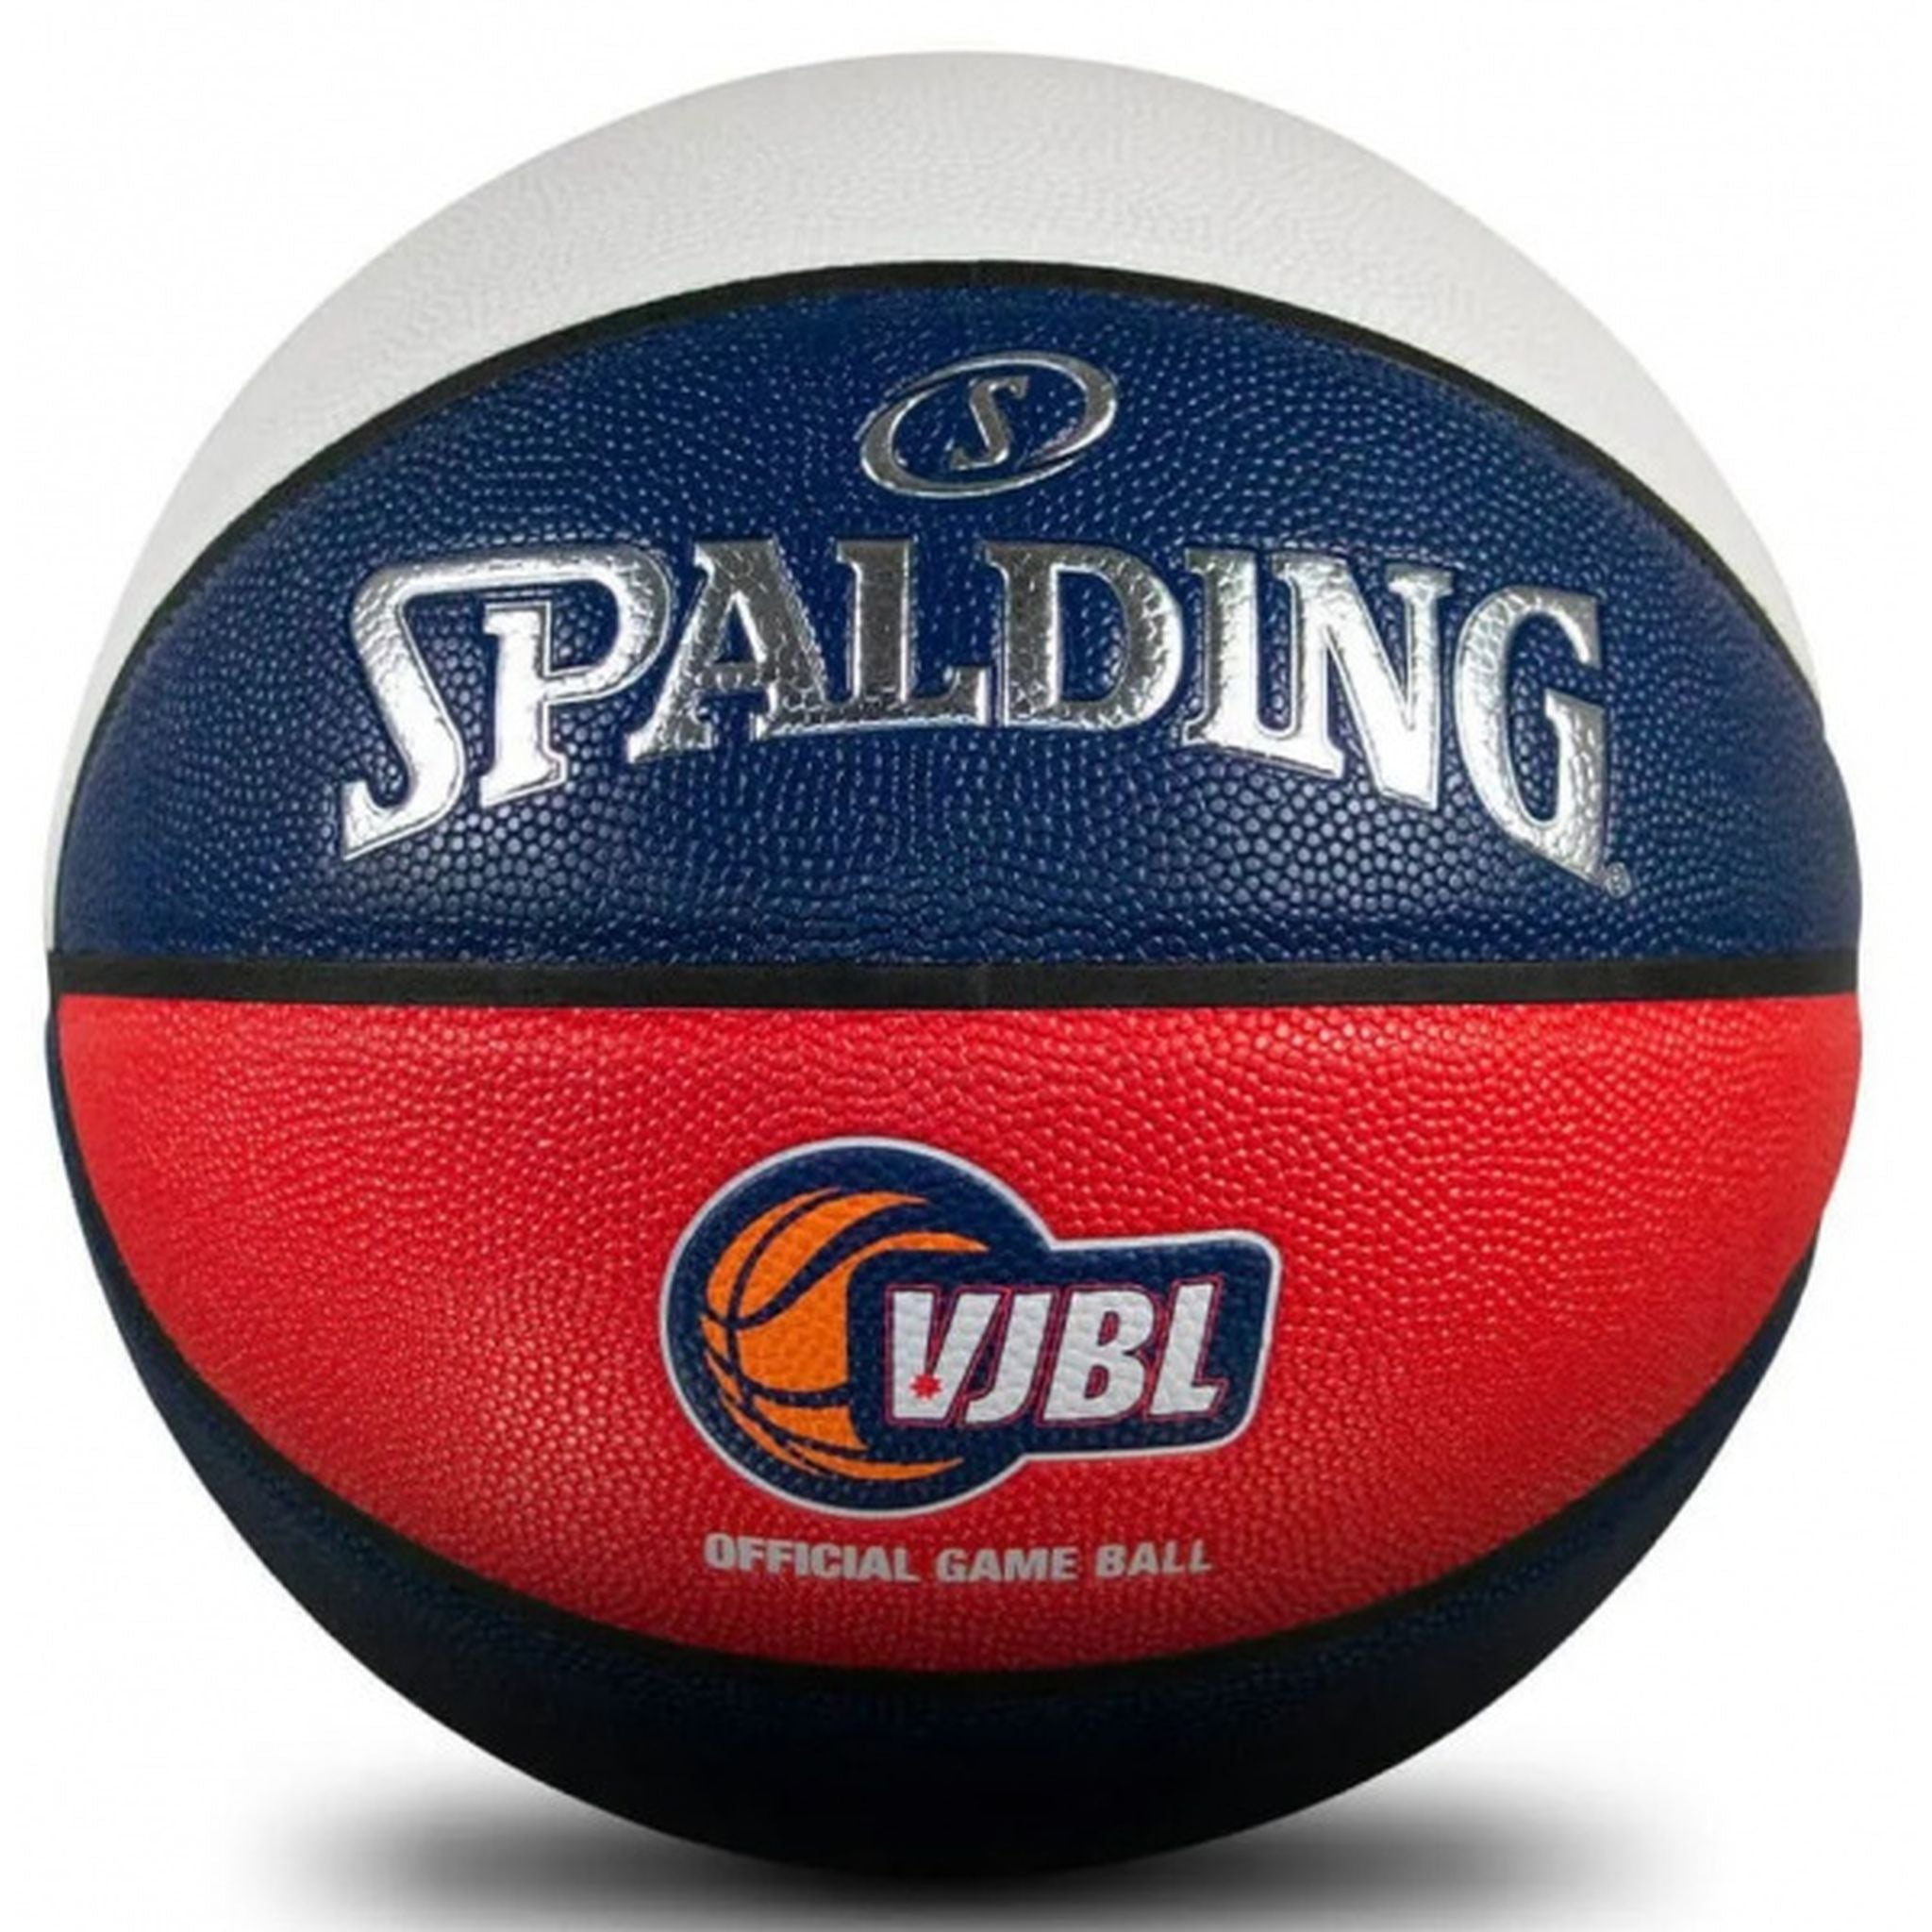 Spalding TF-Advance 750 VJBL Game Ball